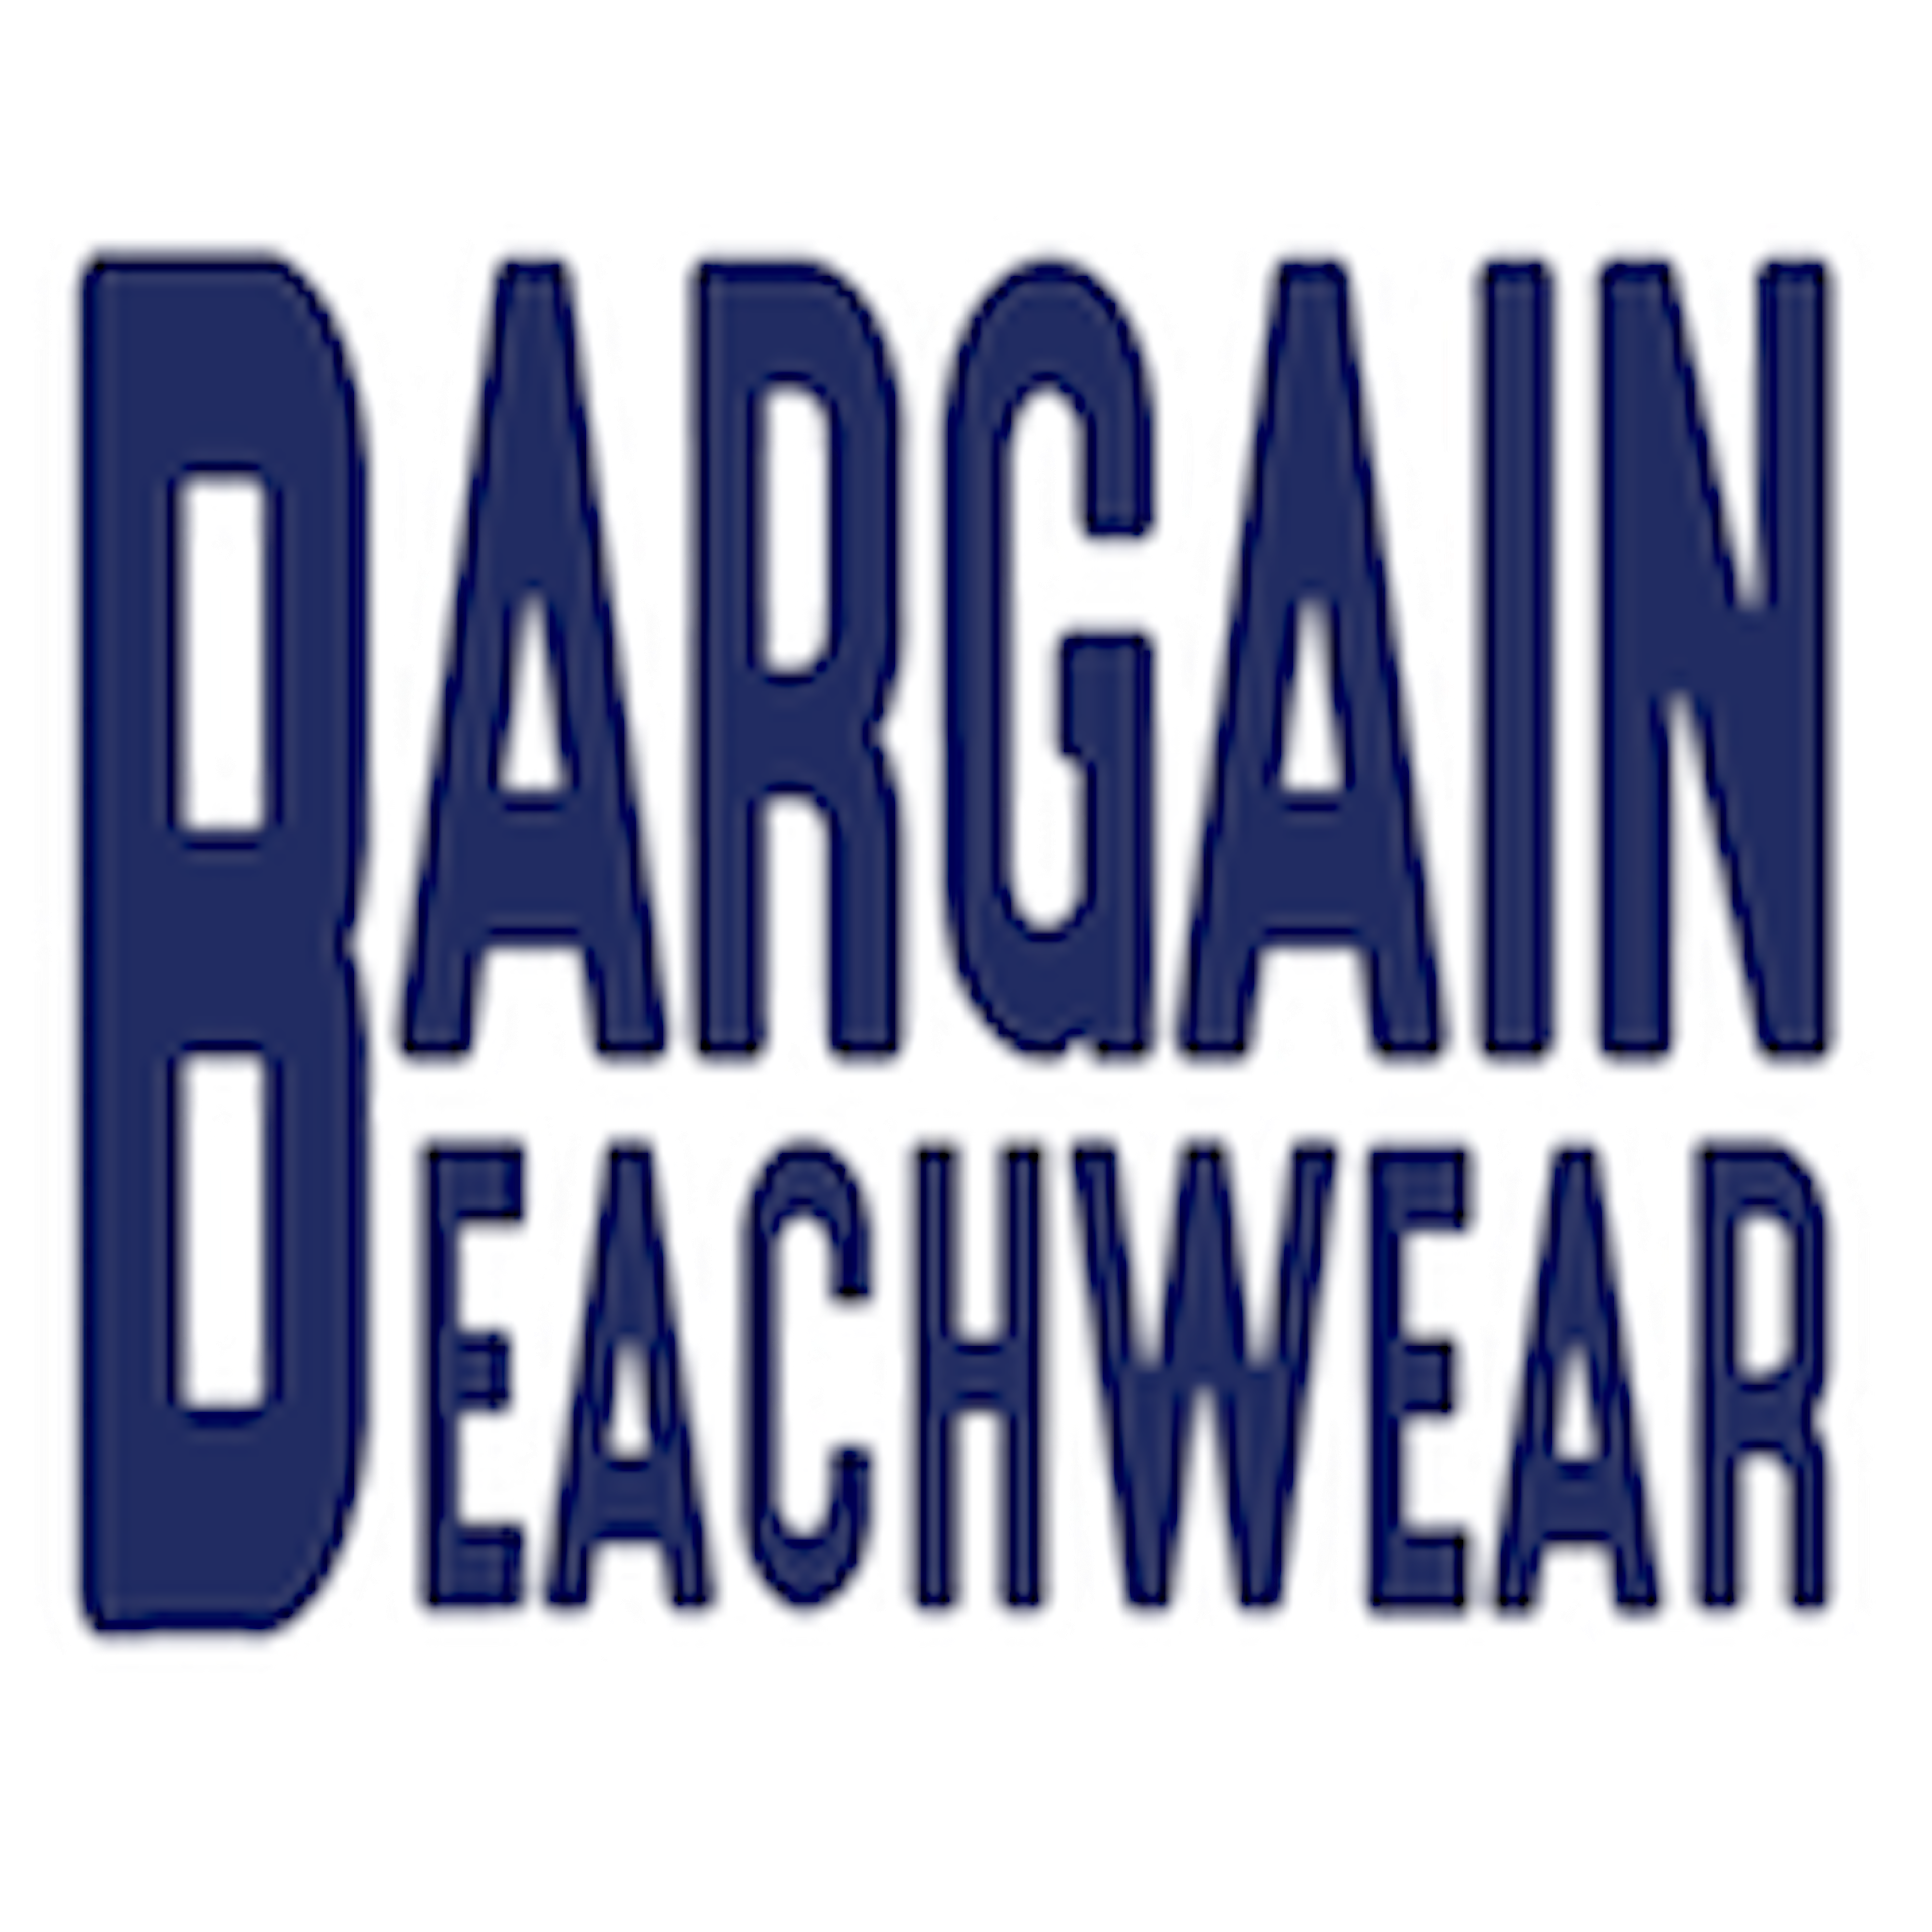 Bargain Beachwear